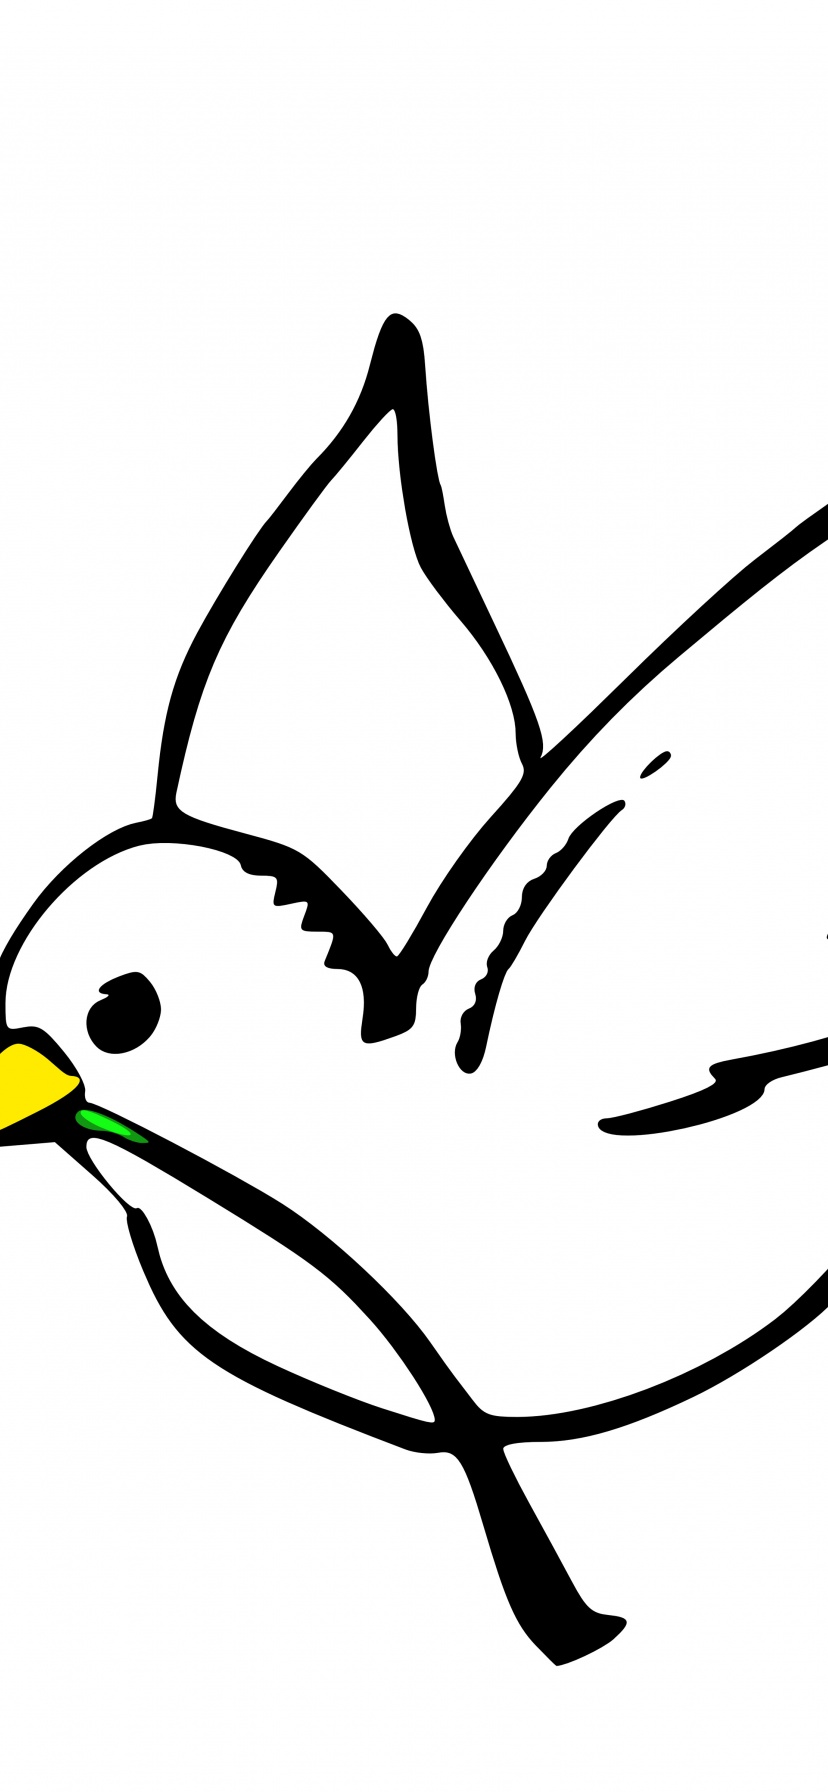 Dove Of Peace